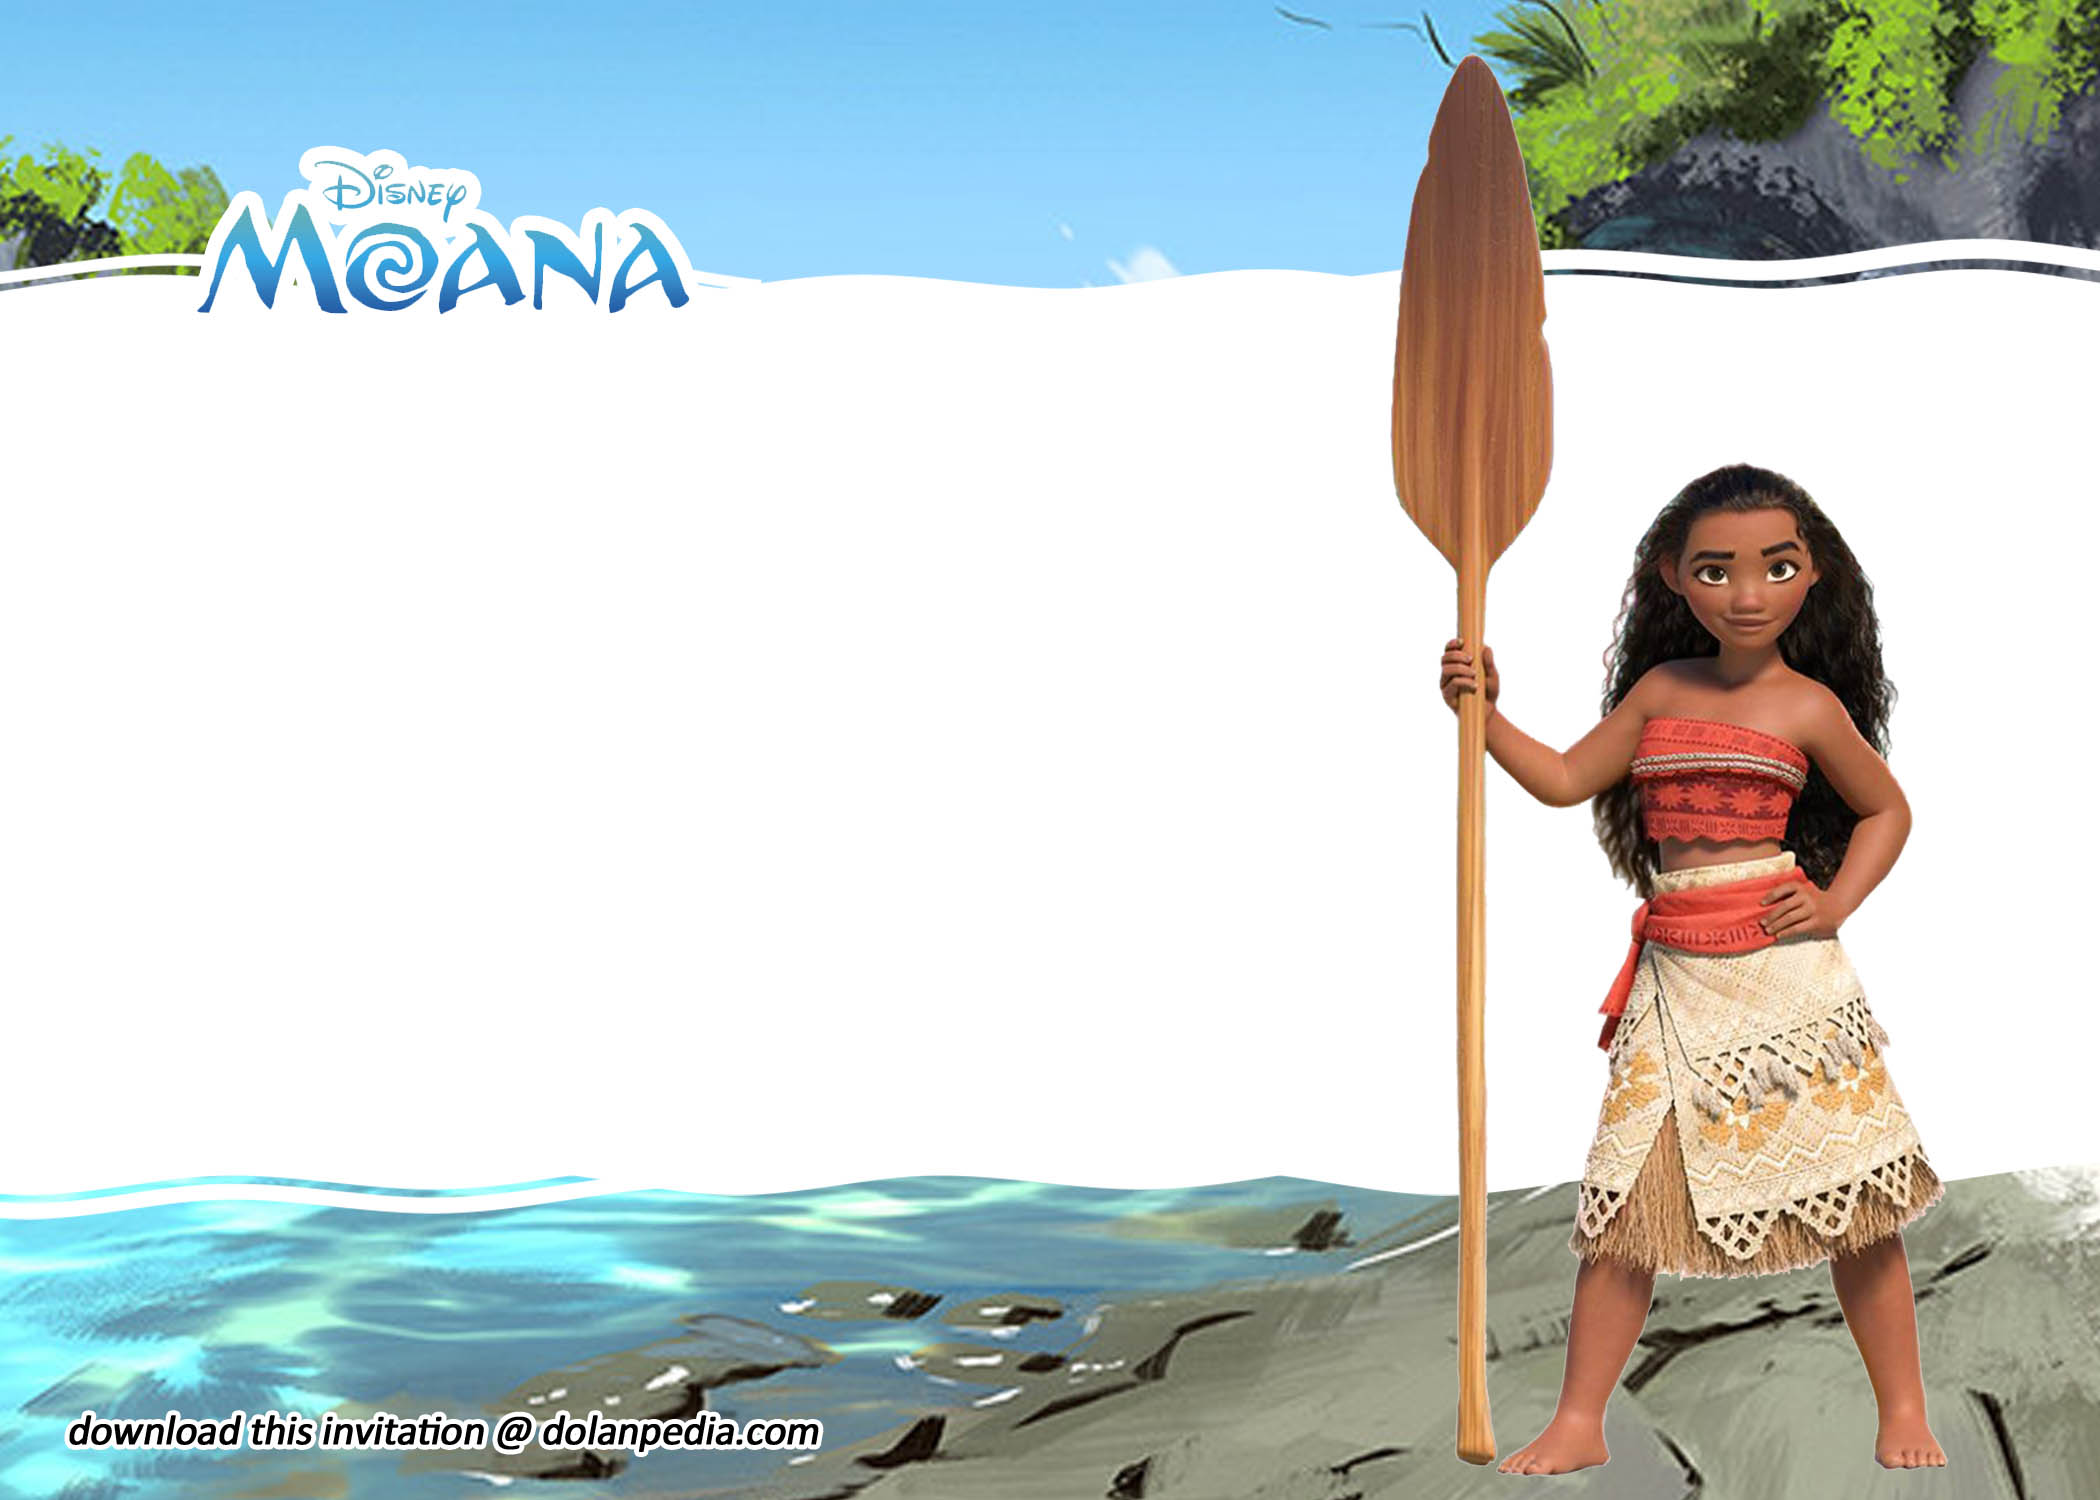 moana-invitation-template-hold-paddle-dolanpedia-invitation-images